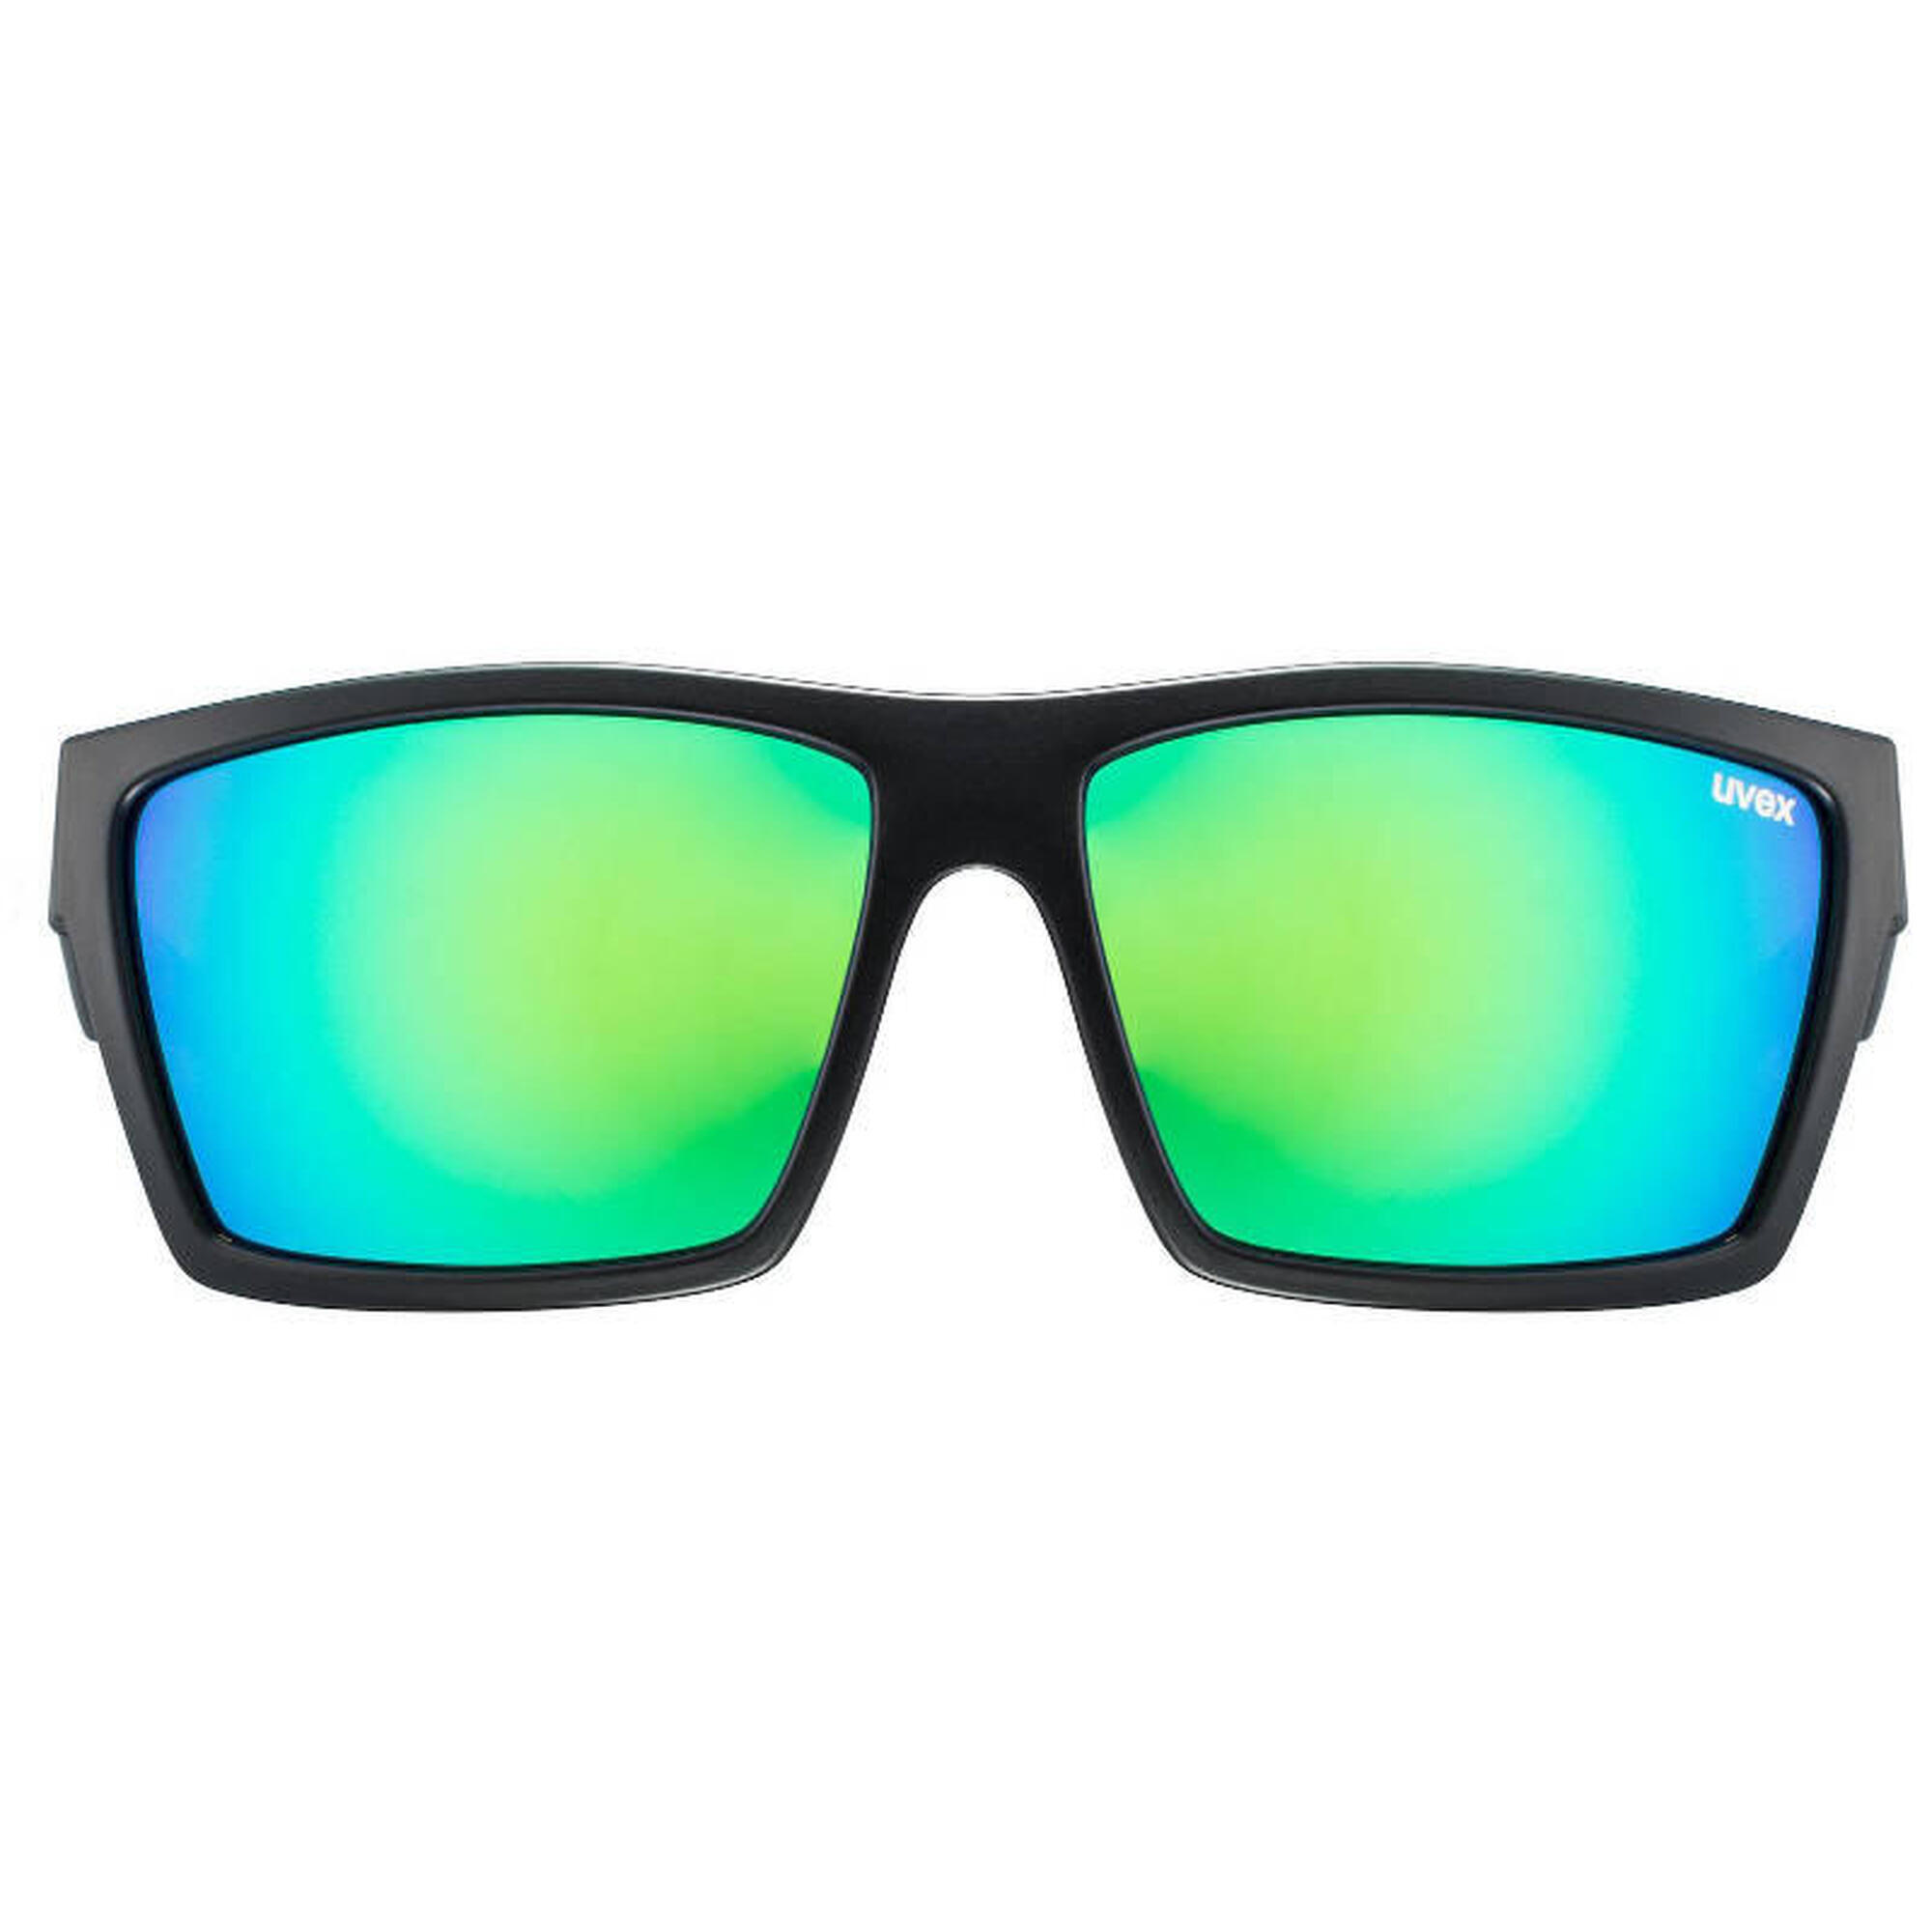 Uvex Sonnenbrille LGL 29 black mir green